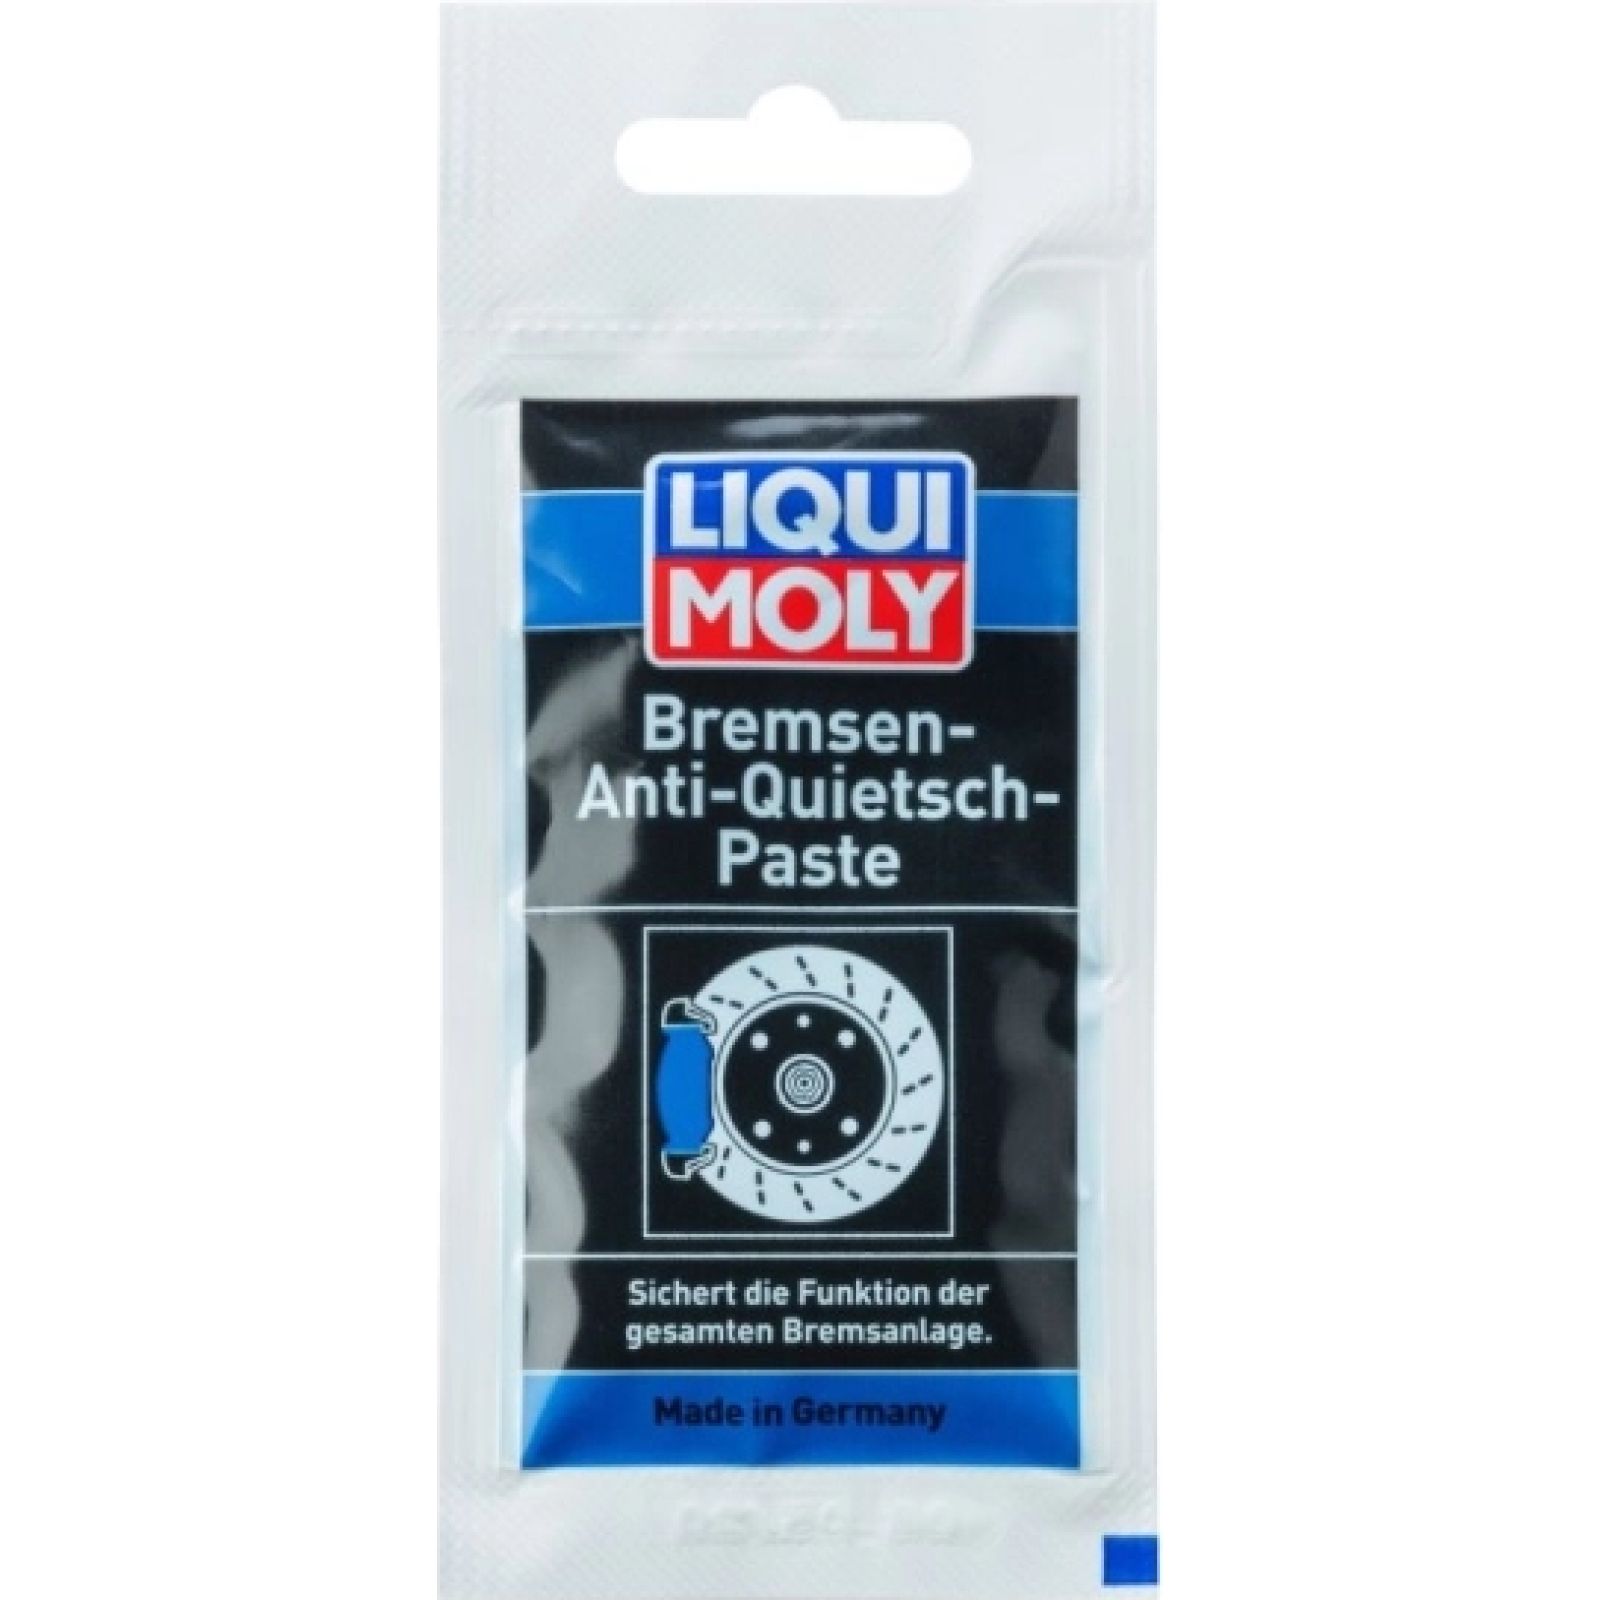 Bremsen-Anti-Quietsch-Paste LIQUI MOLY 3078 10g